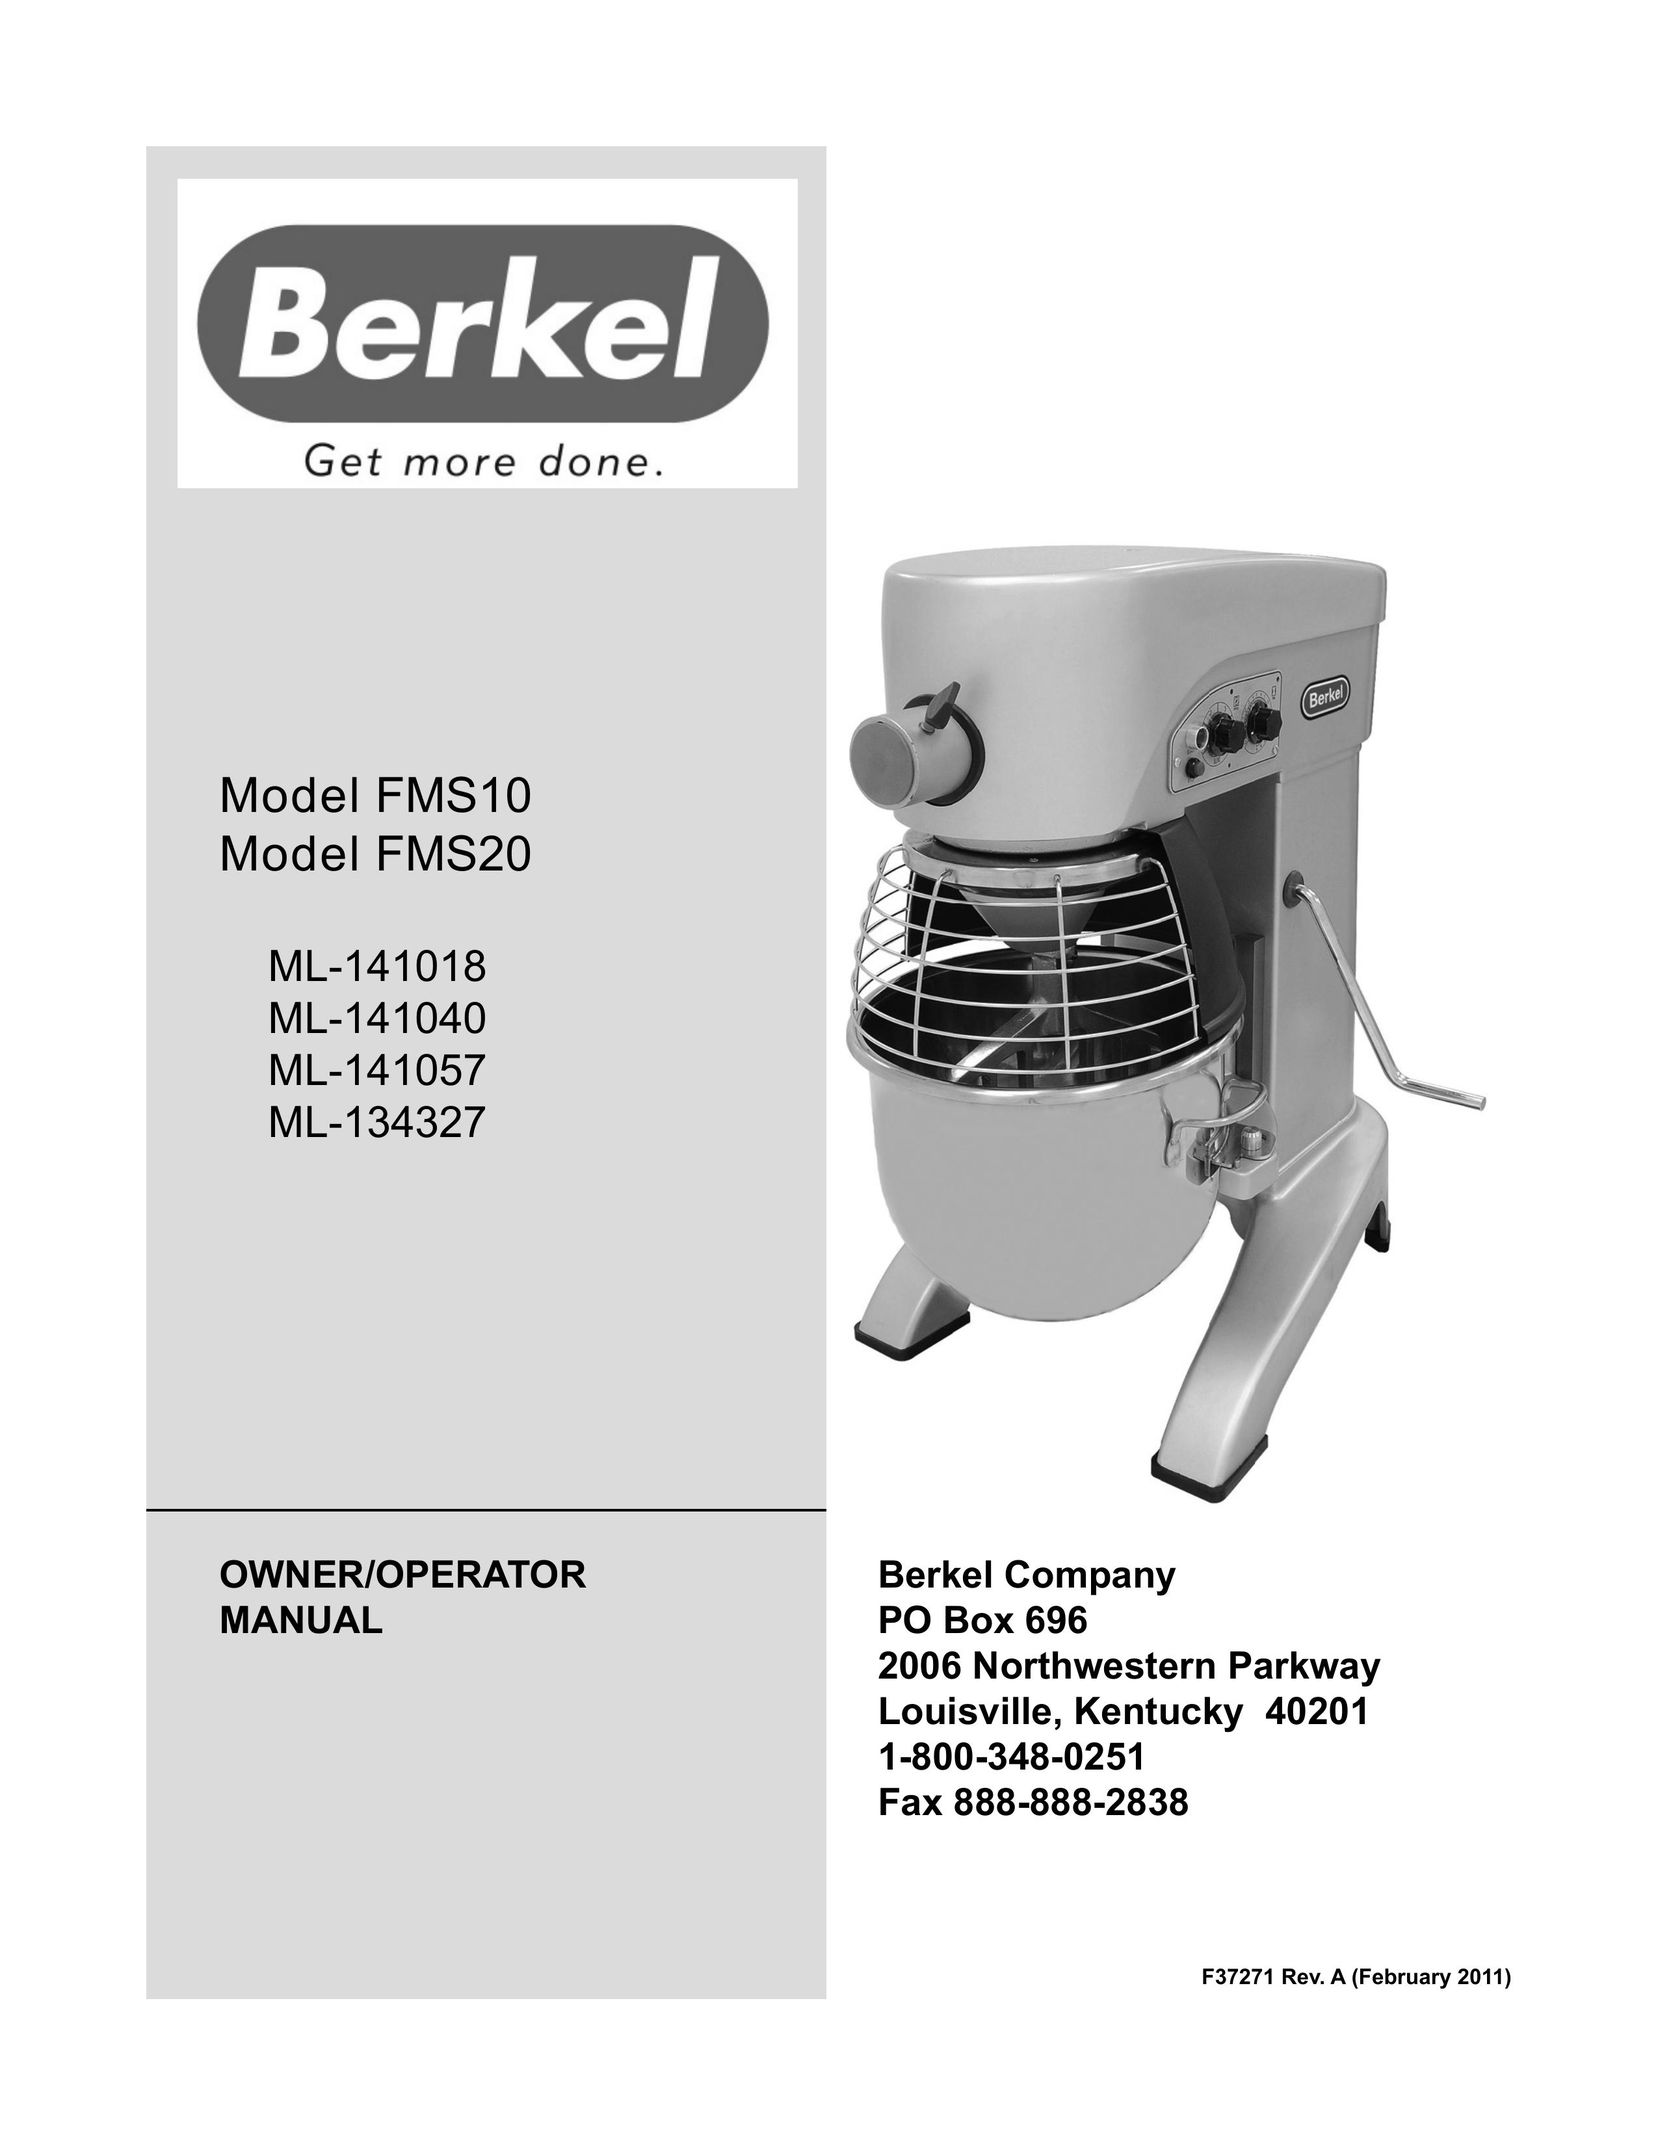 Berkel ML-141057 Mixer User Manual